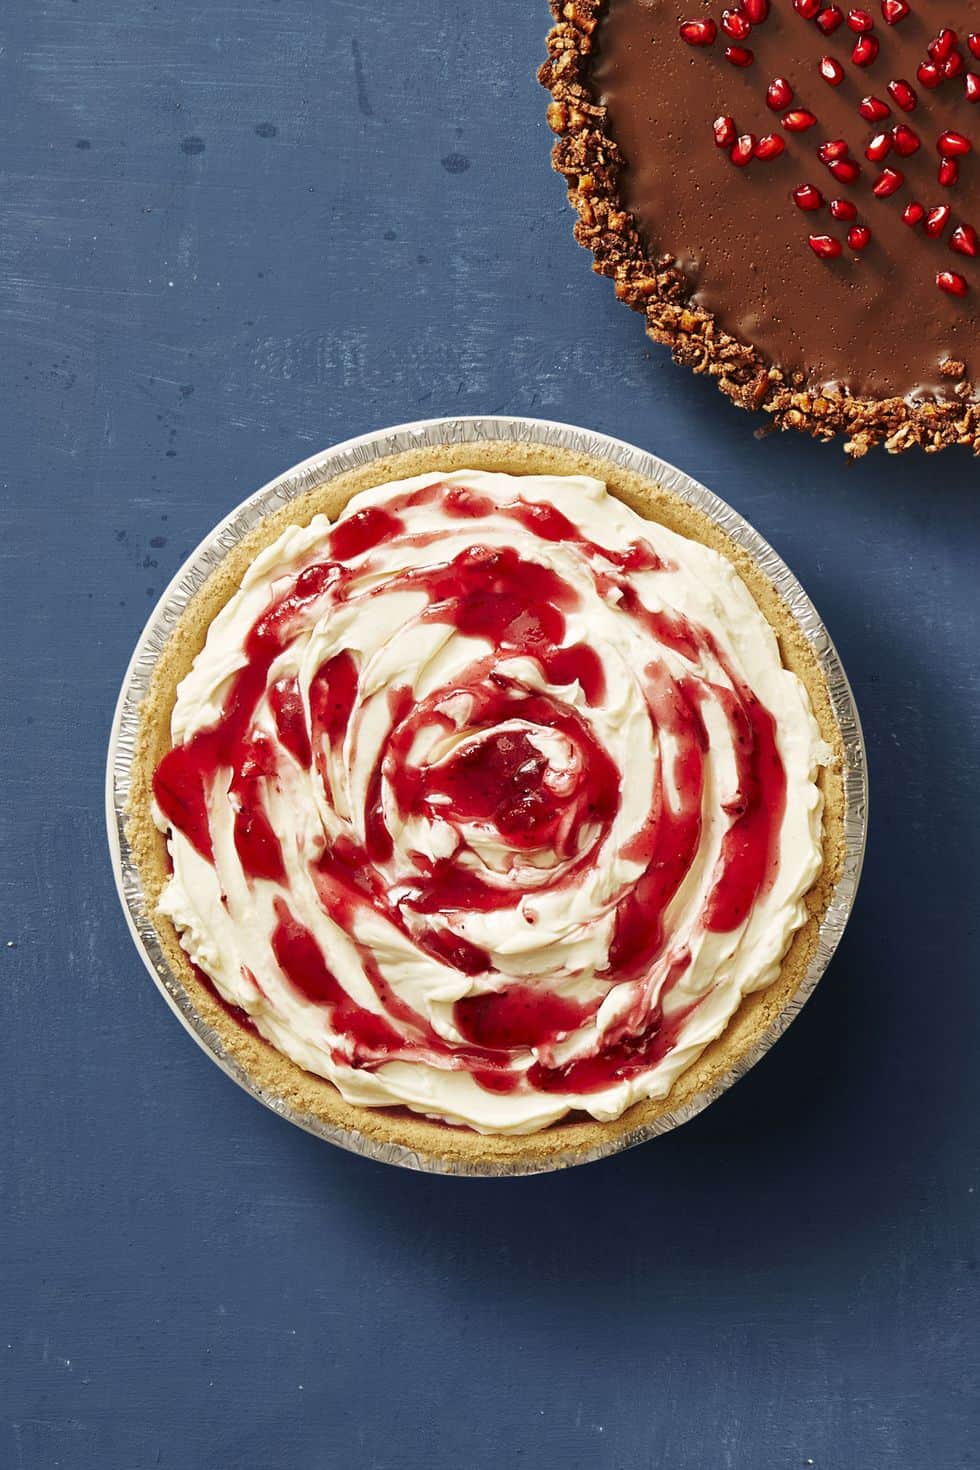 Easy Thanksgiving Dessert - No-bake Cranberry Cheesecake